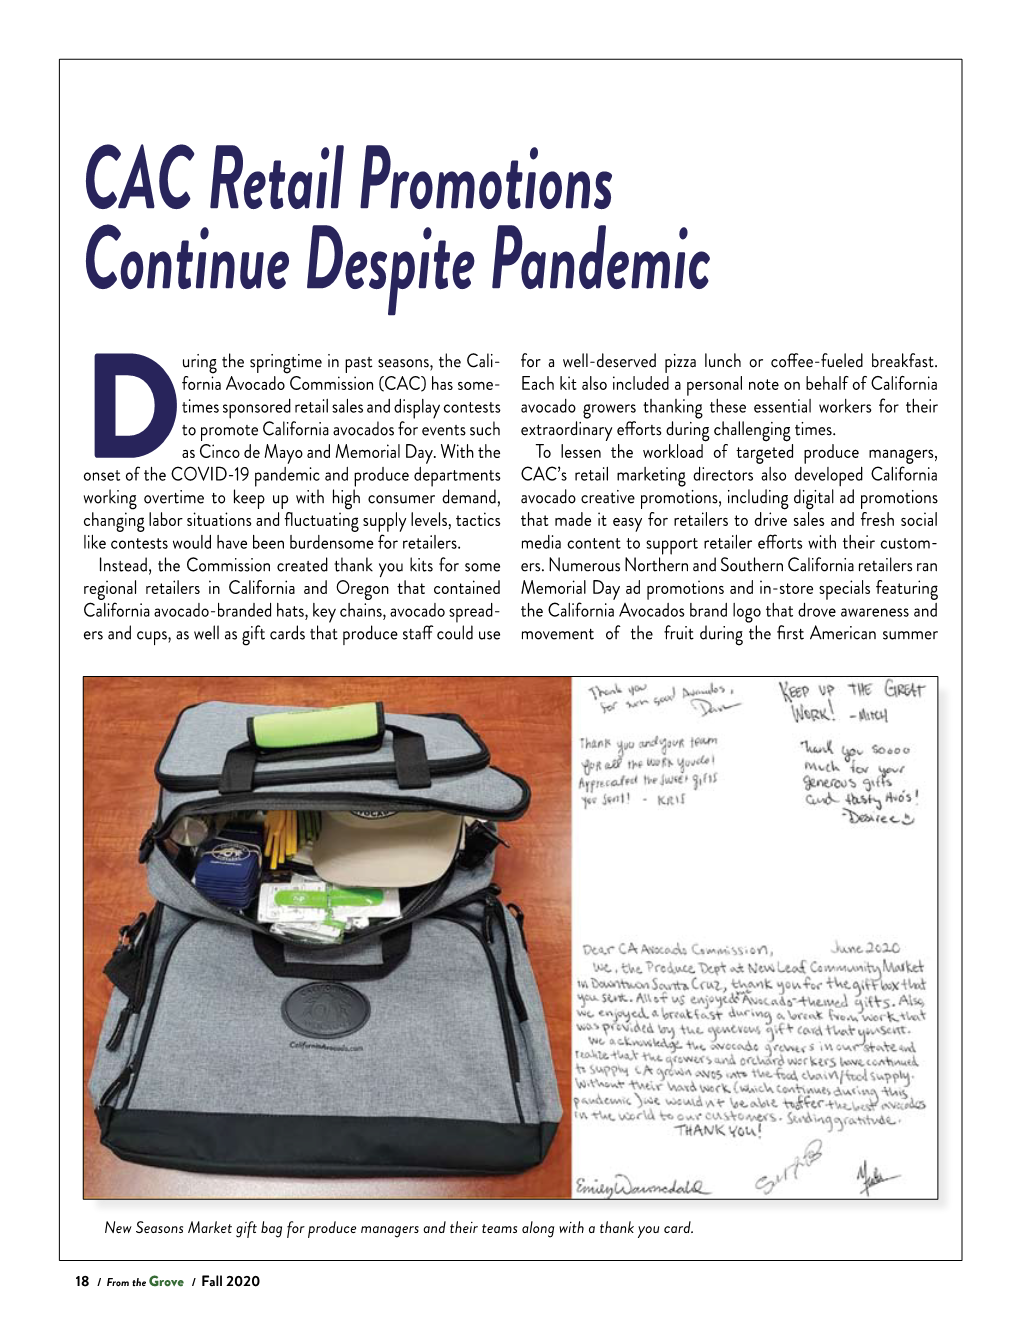 CAC Retail Promotions Continue Despite Pandemic